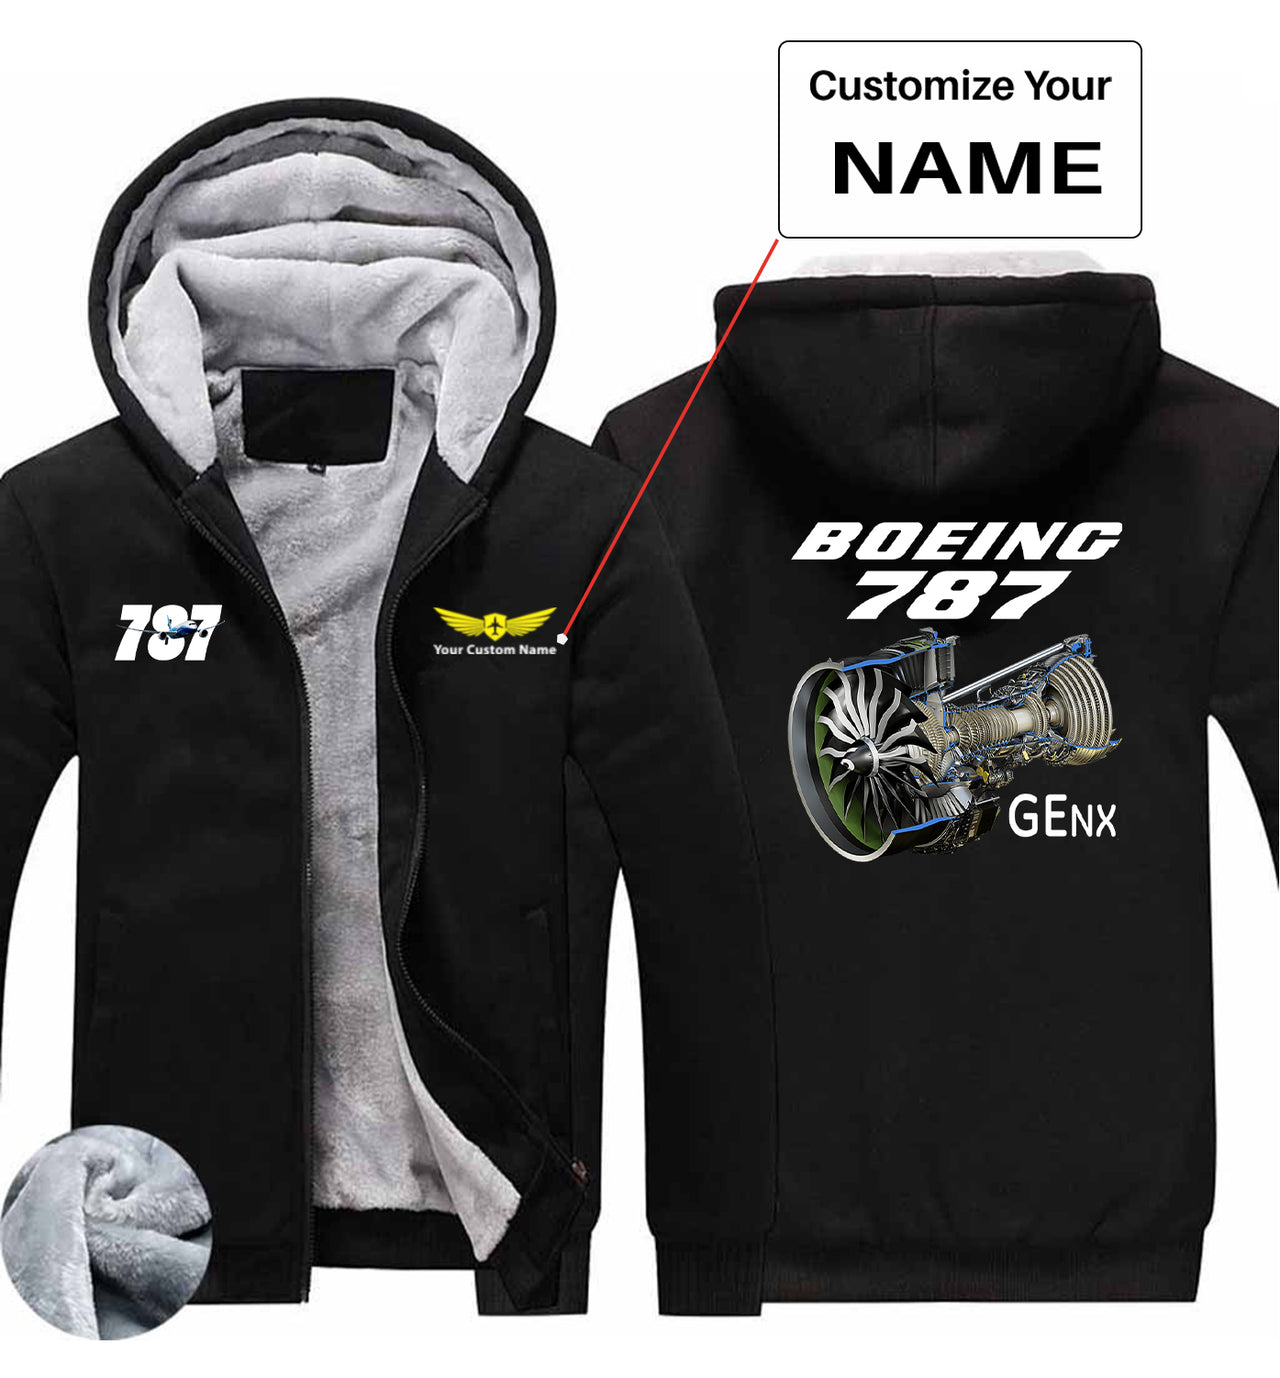 Boeing 787 & GENX Engine Designed Zipped Sweatshirts